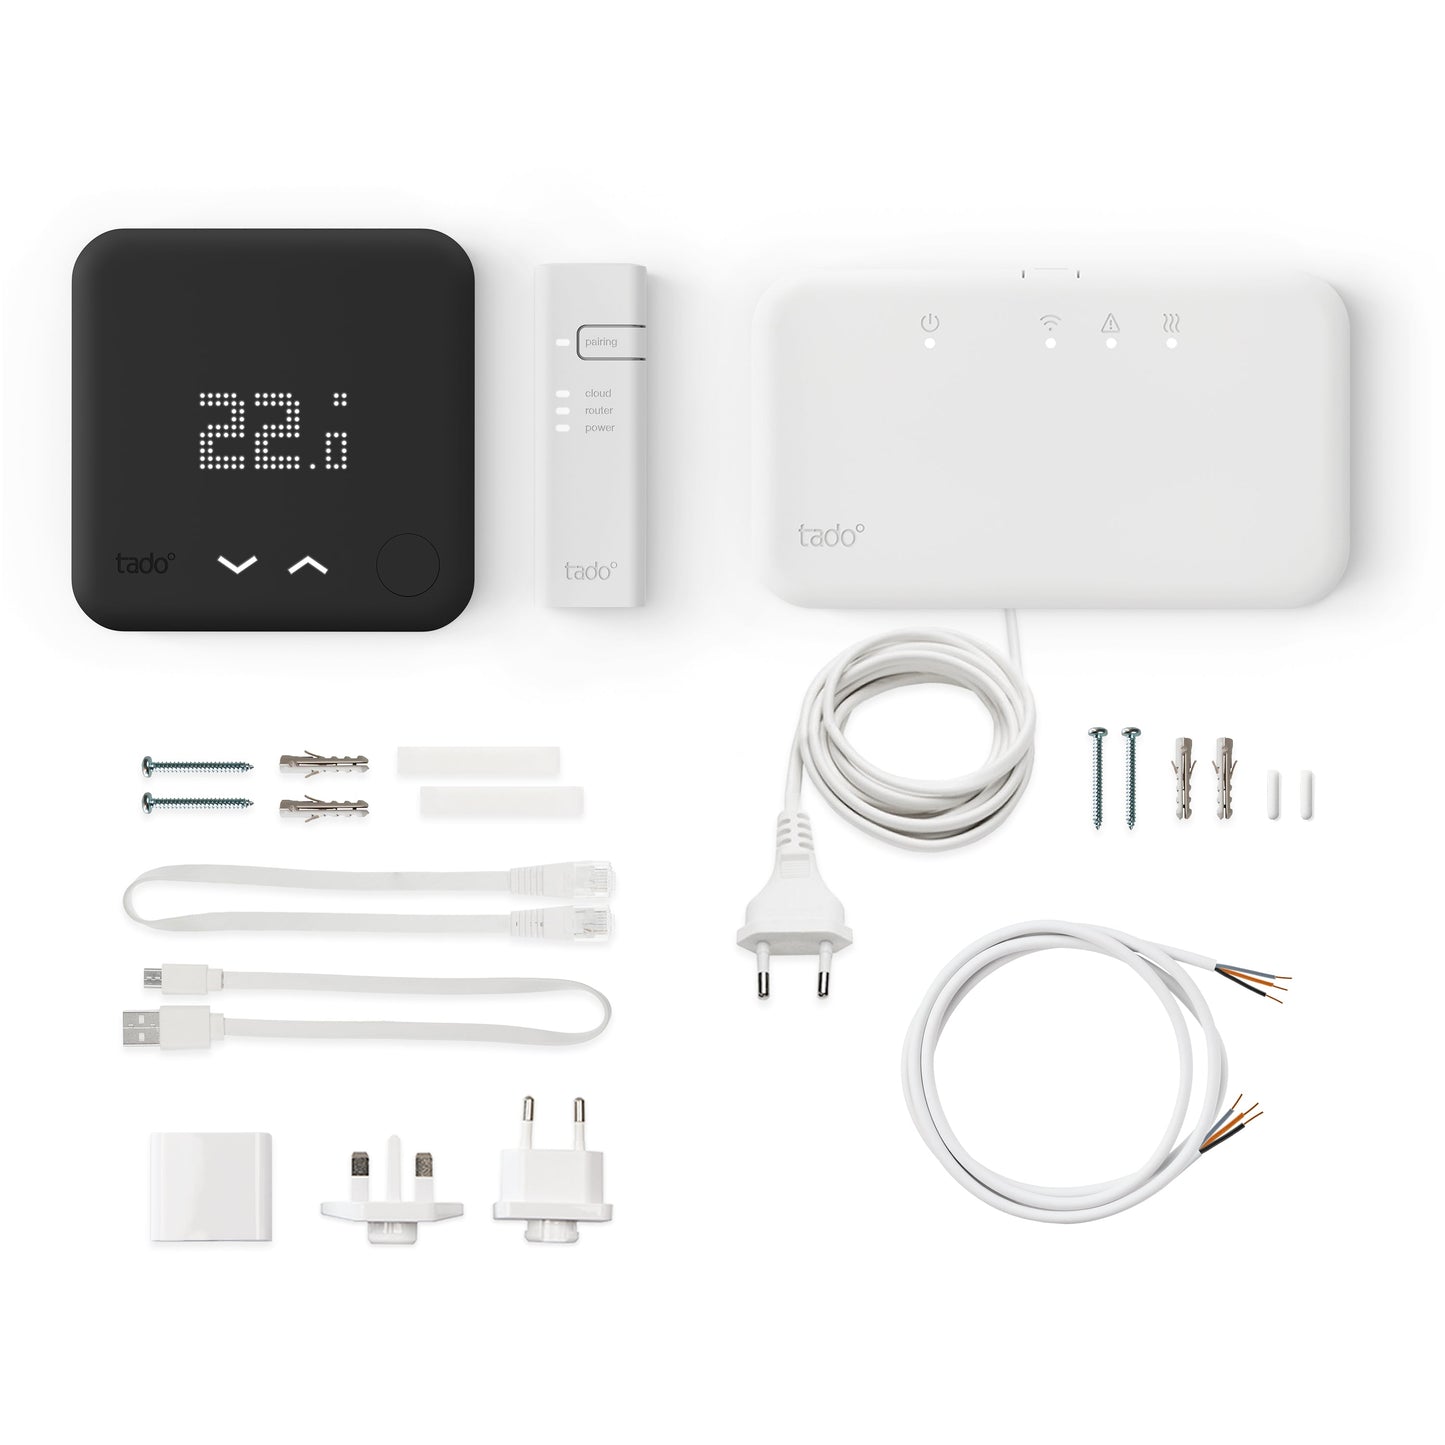 Termostato Intelligente wireless - Kit di Base V3+ Black Edition